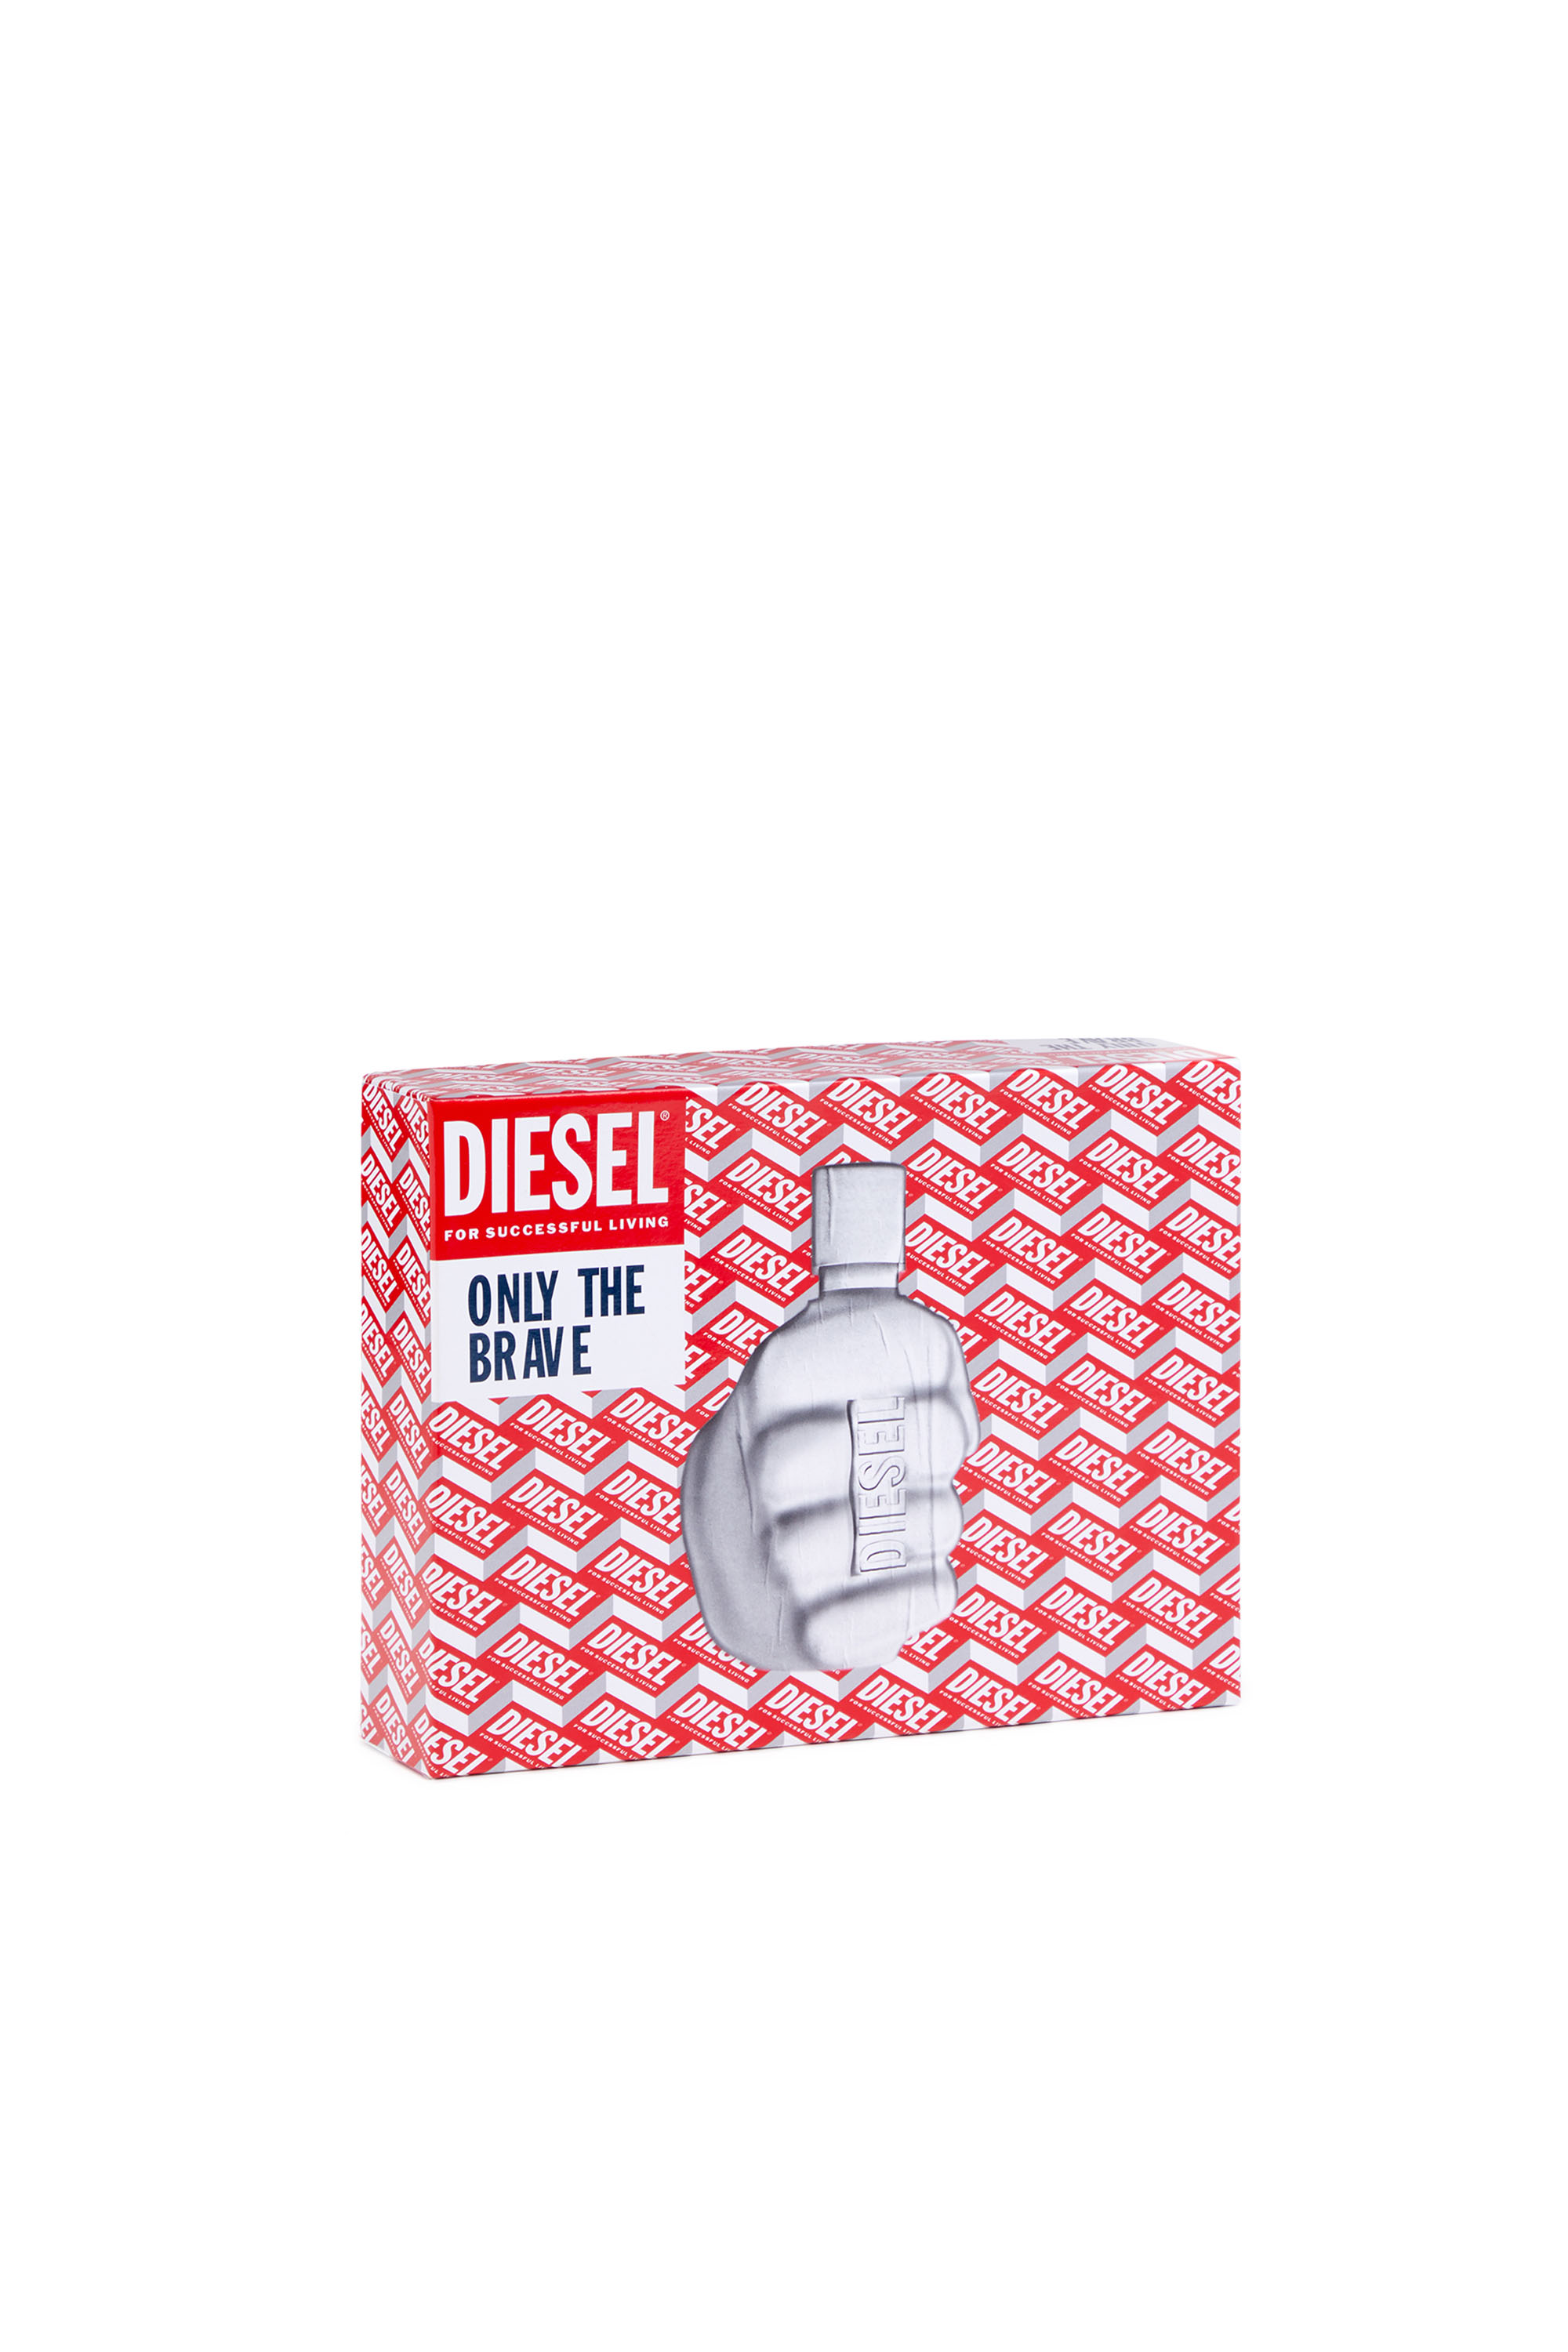 Diesel - ONLY THE BRAVE 50 ML  GIFT SET, Blau - Image 3